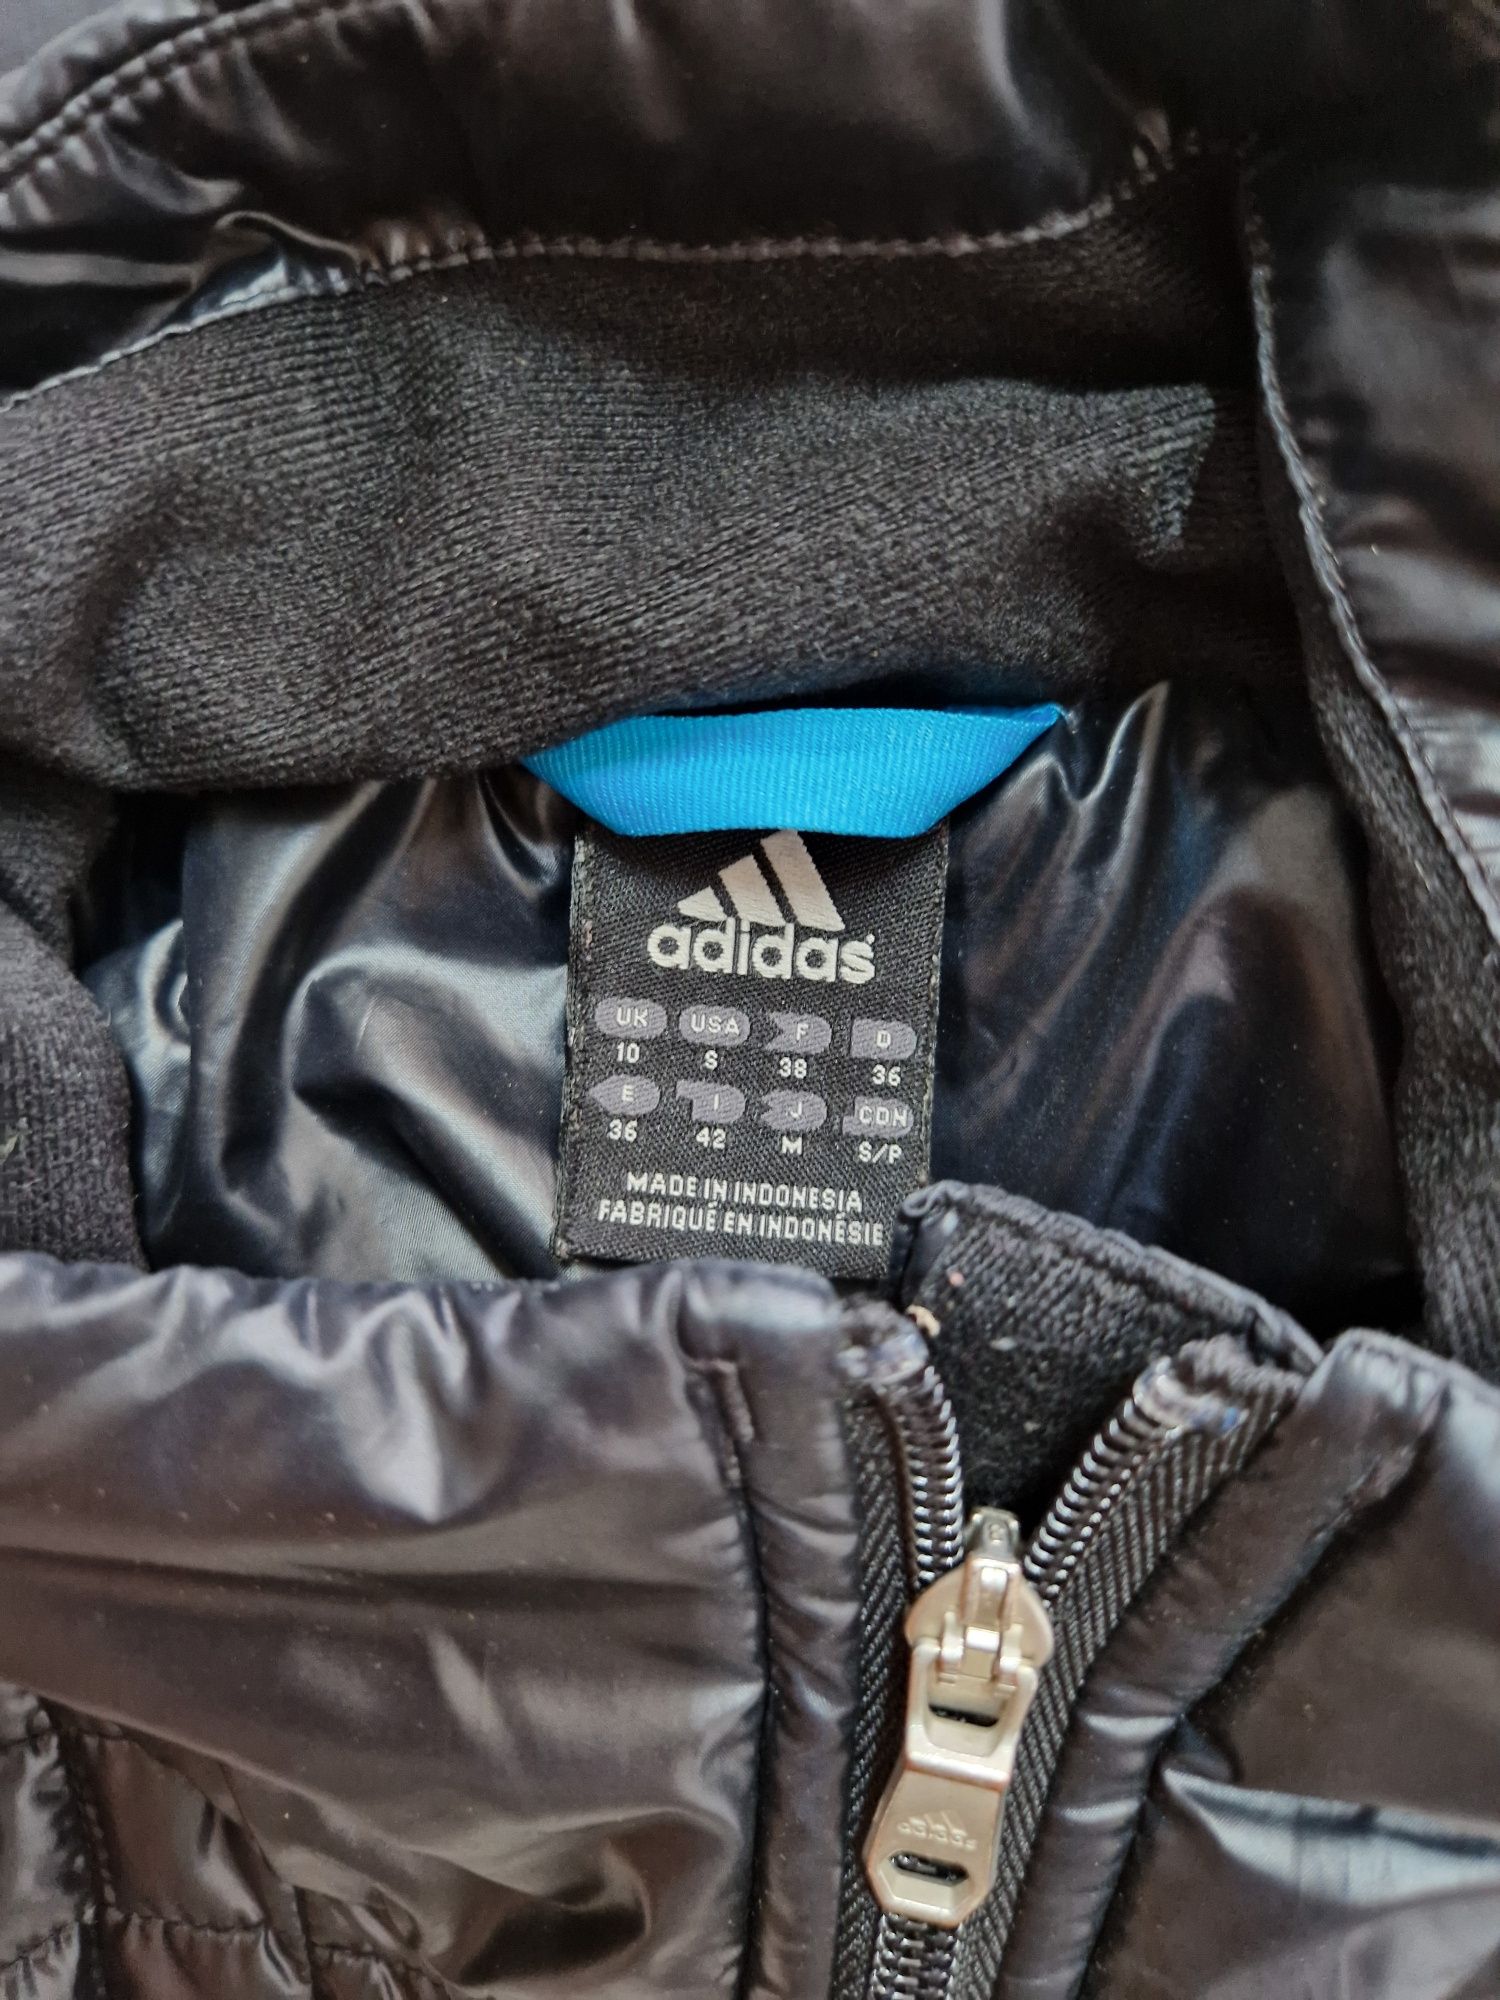 Adidas kurtka pikowana bomberka ultralight